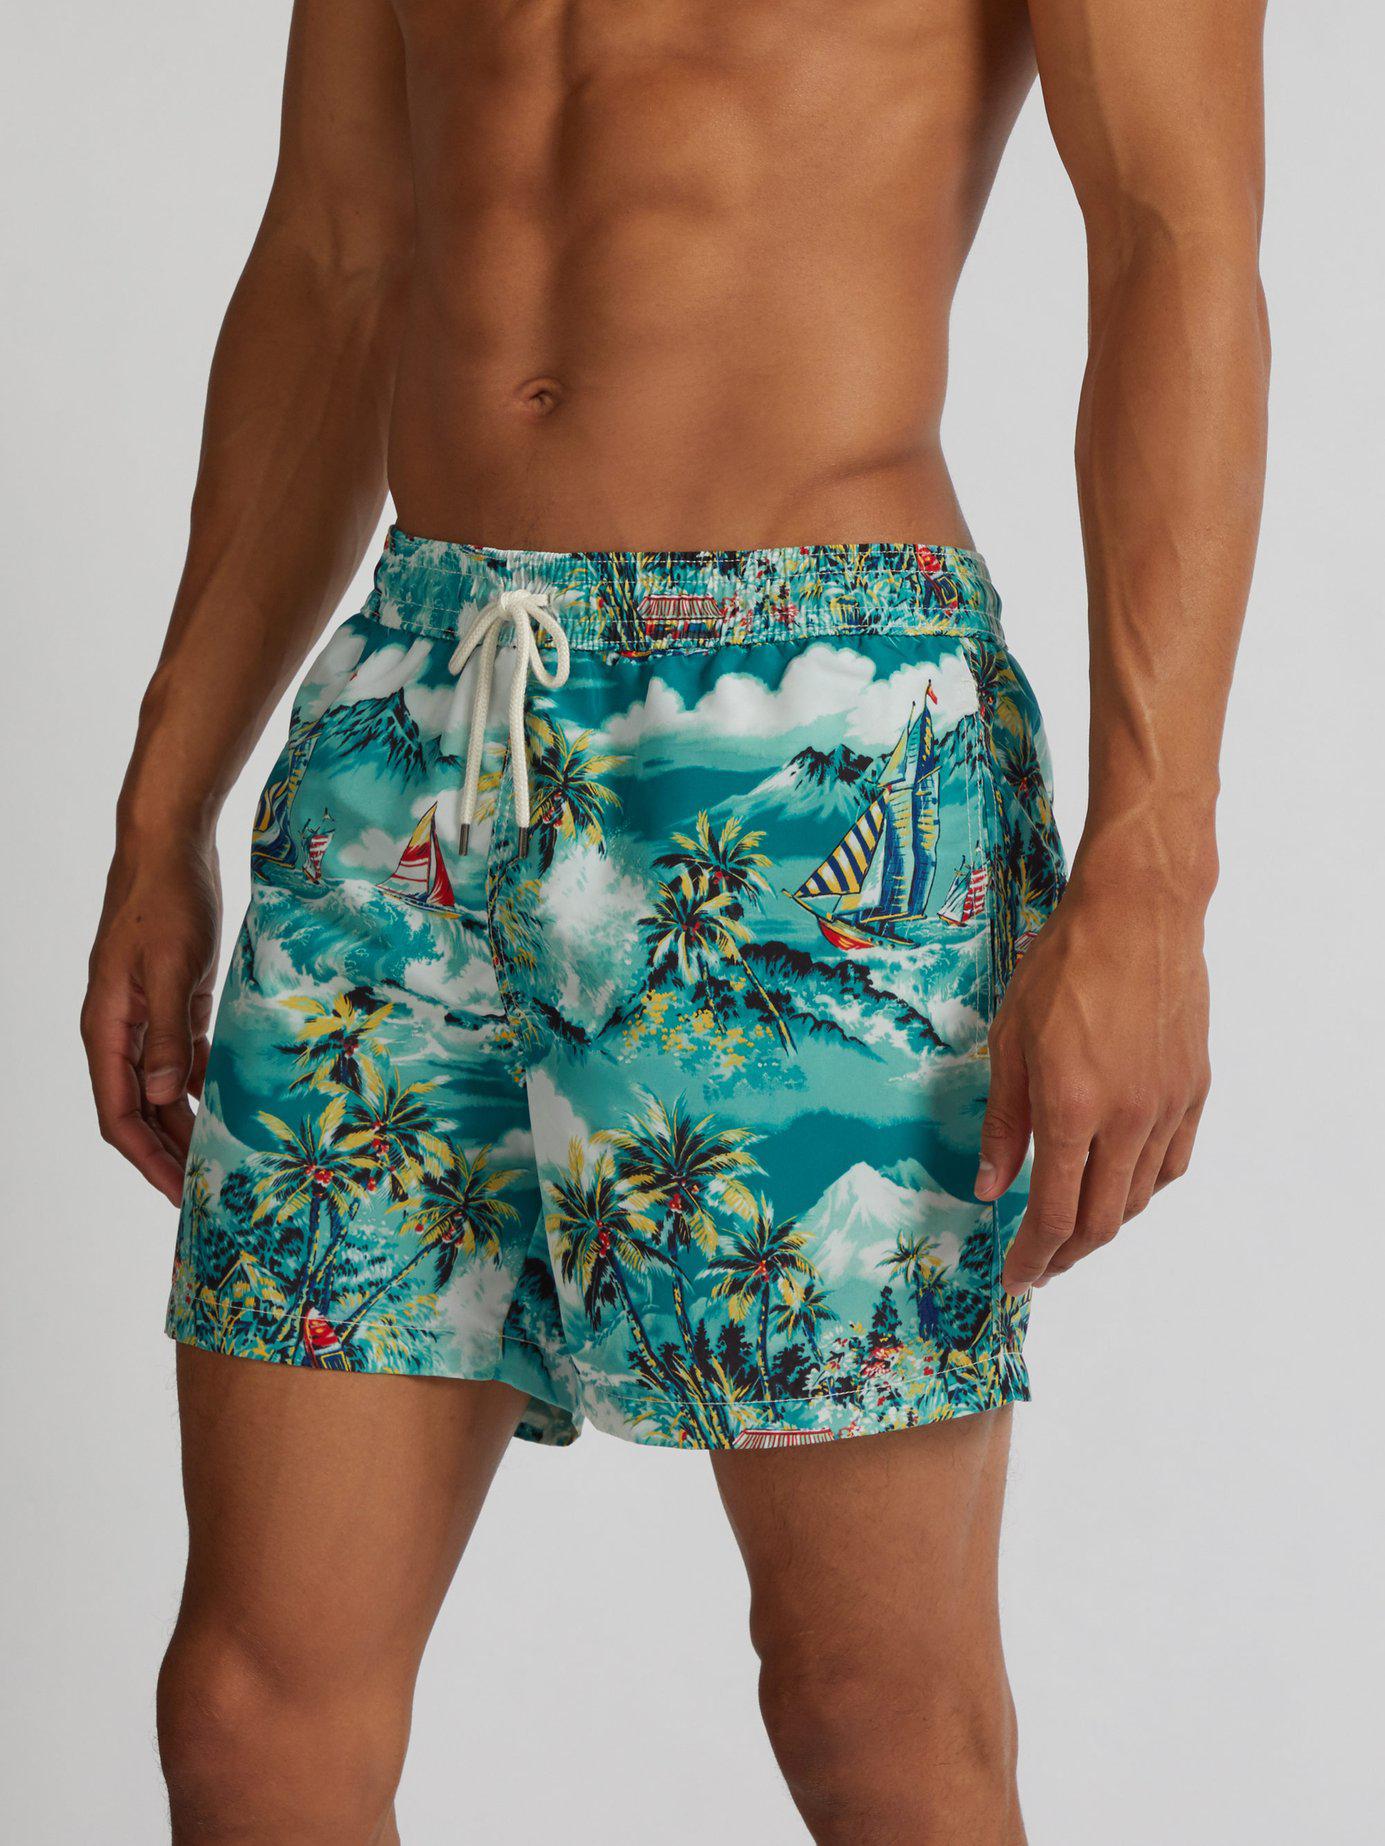 Polo Ralph Lauren Hawaii Print Swim Shorts in Green for Men - Lyst